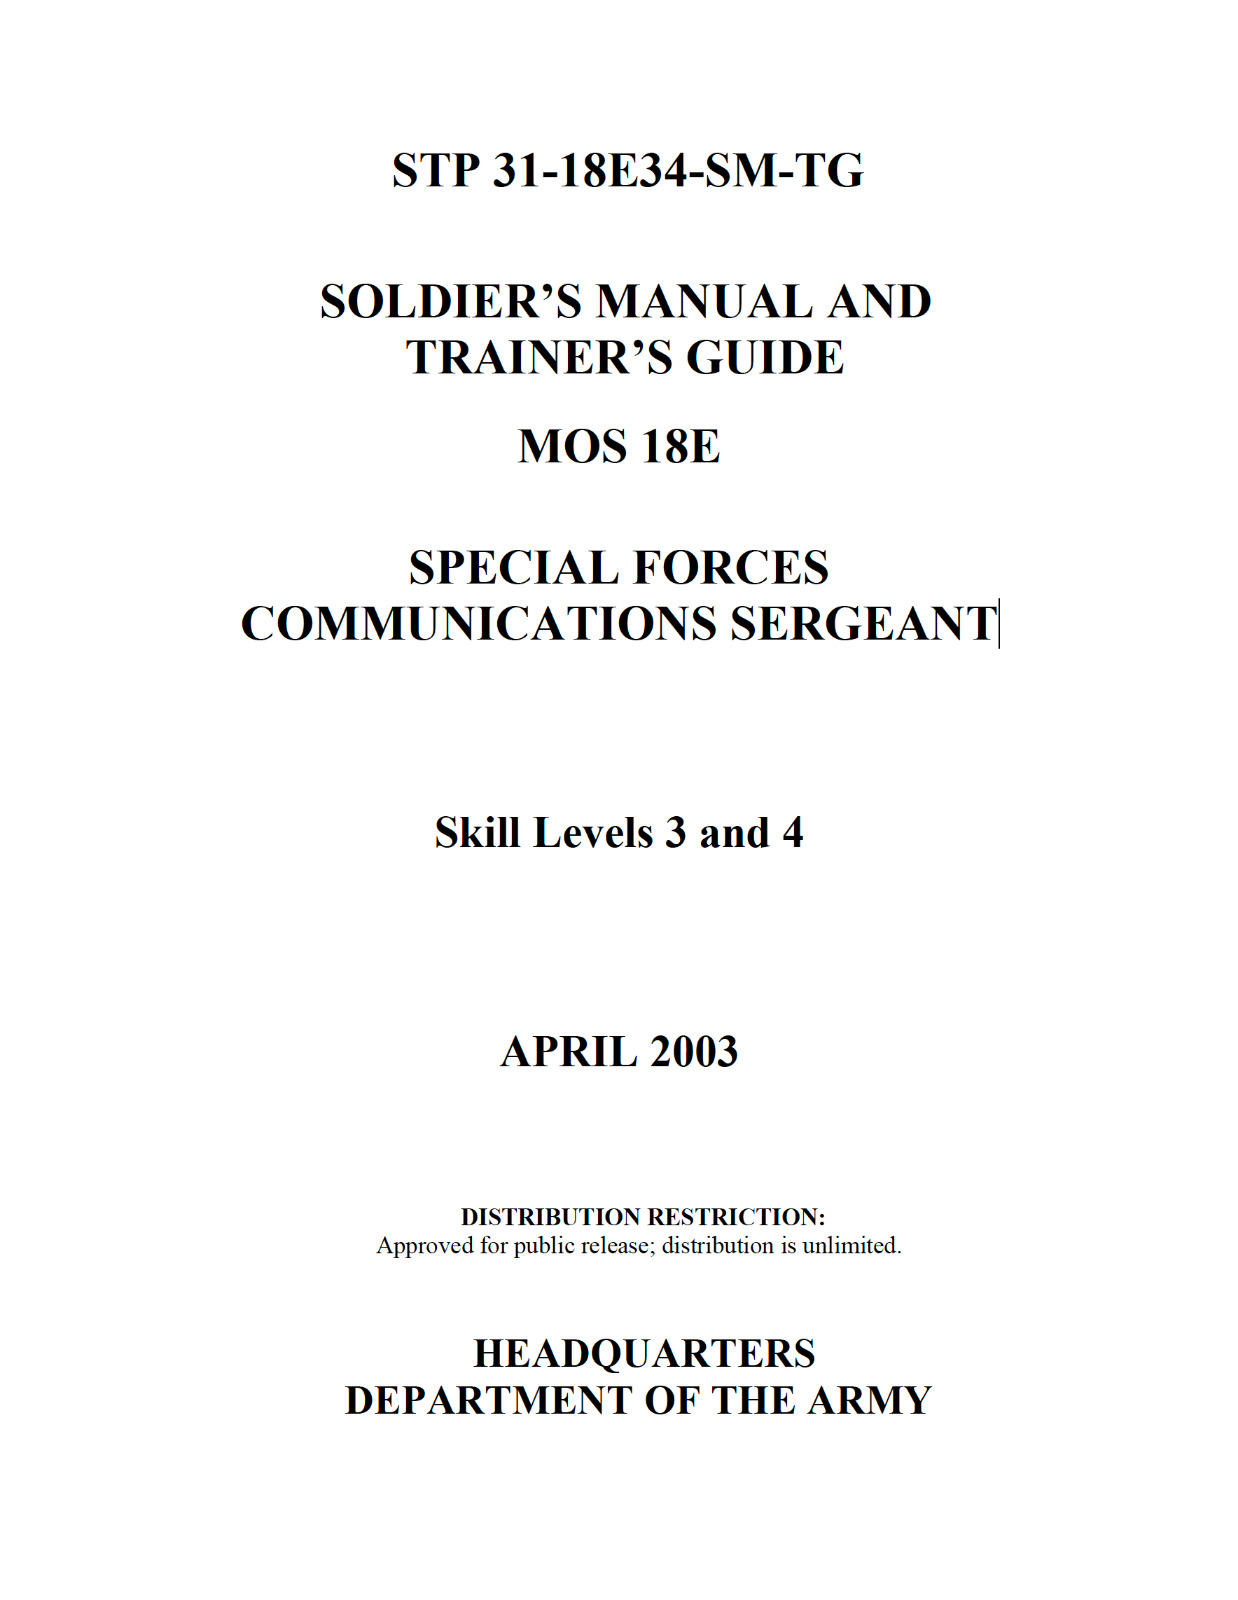 165 Page STP 31-18E34-SM-TG MOS 18E SF COMMUNICATIONS SERGEANT Manual on Data CD